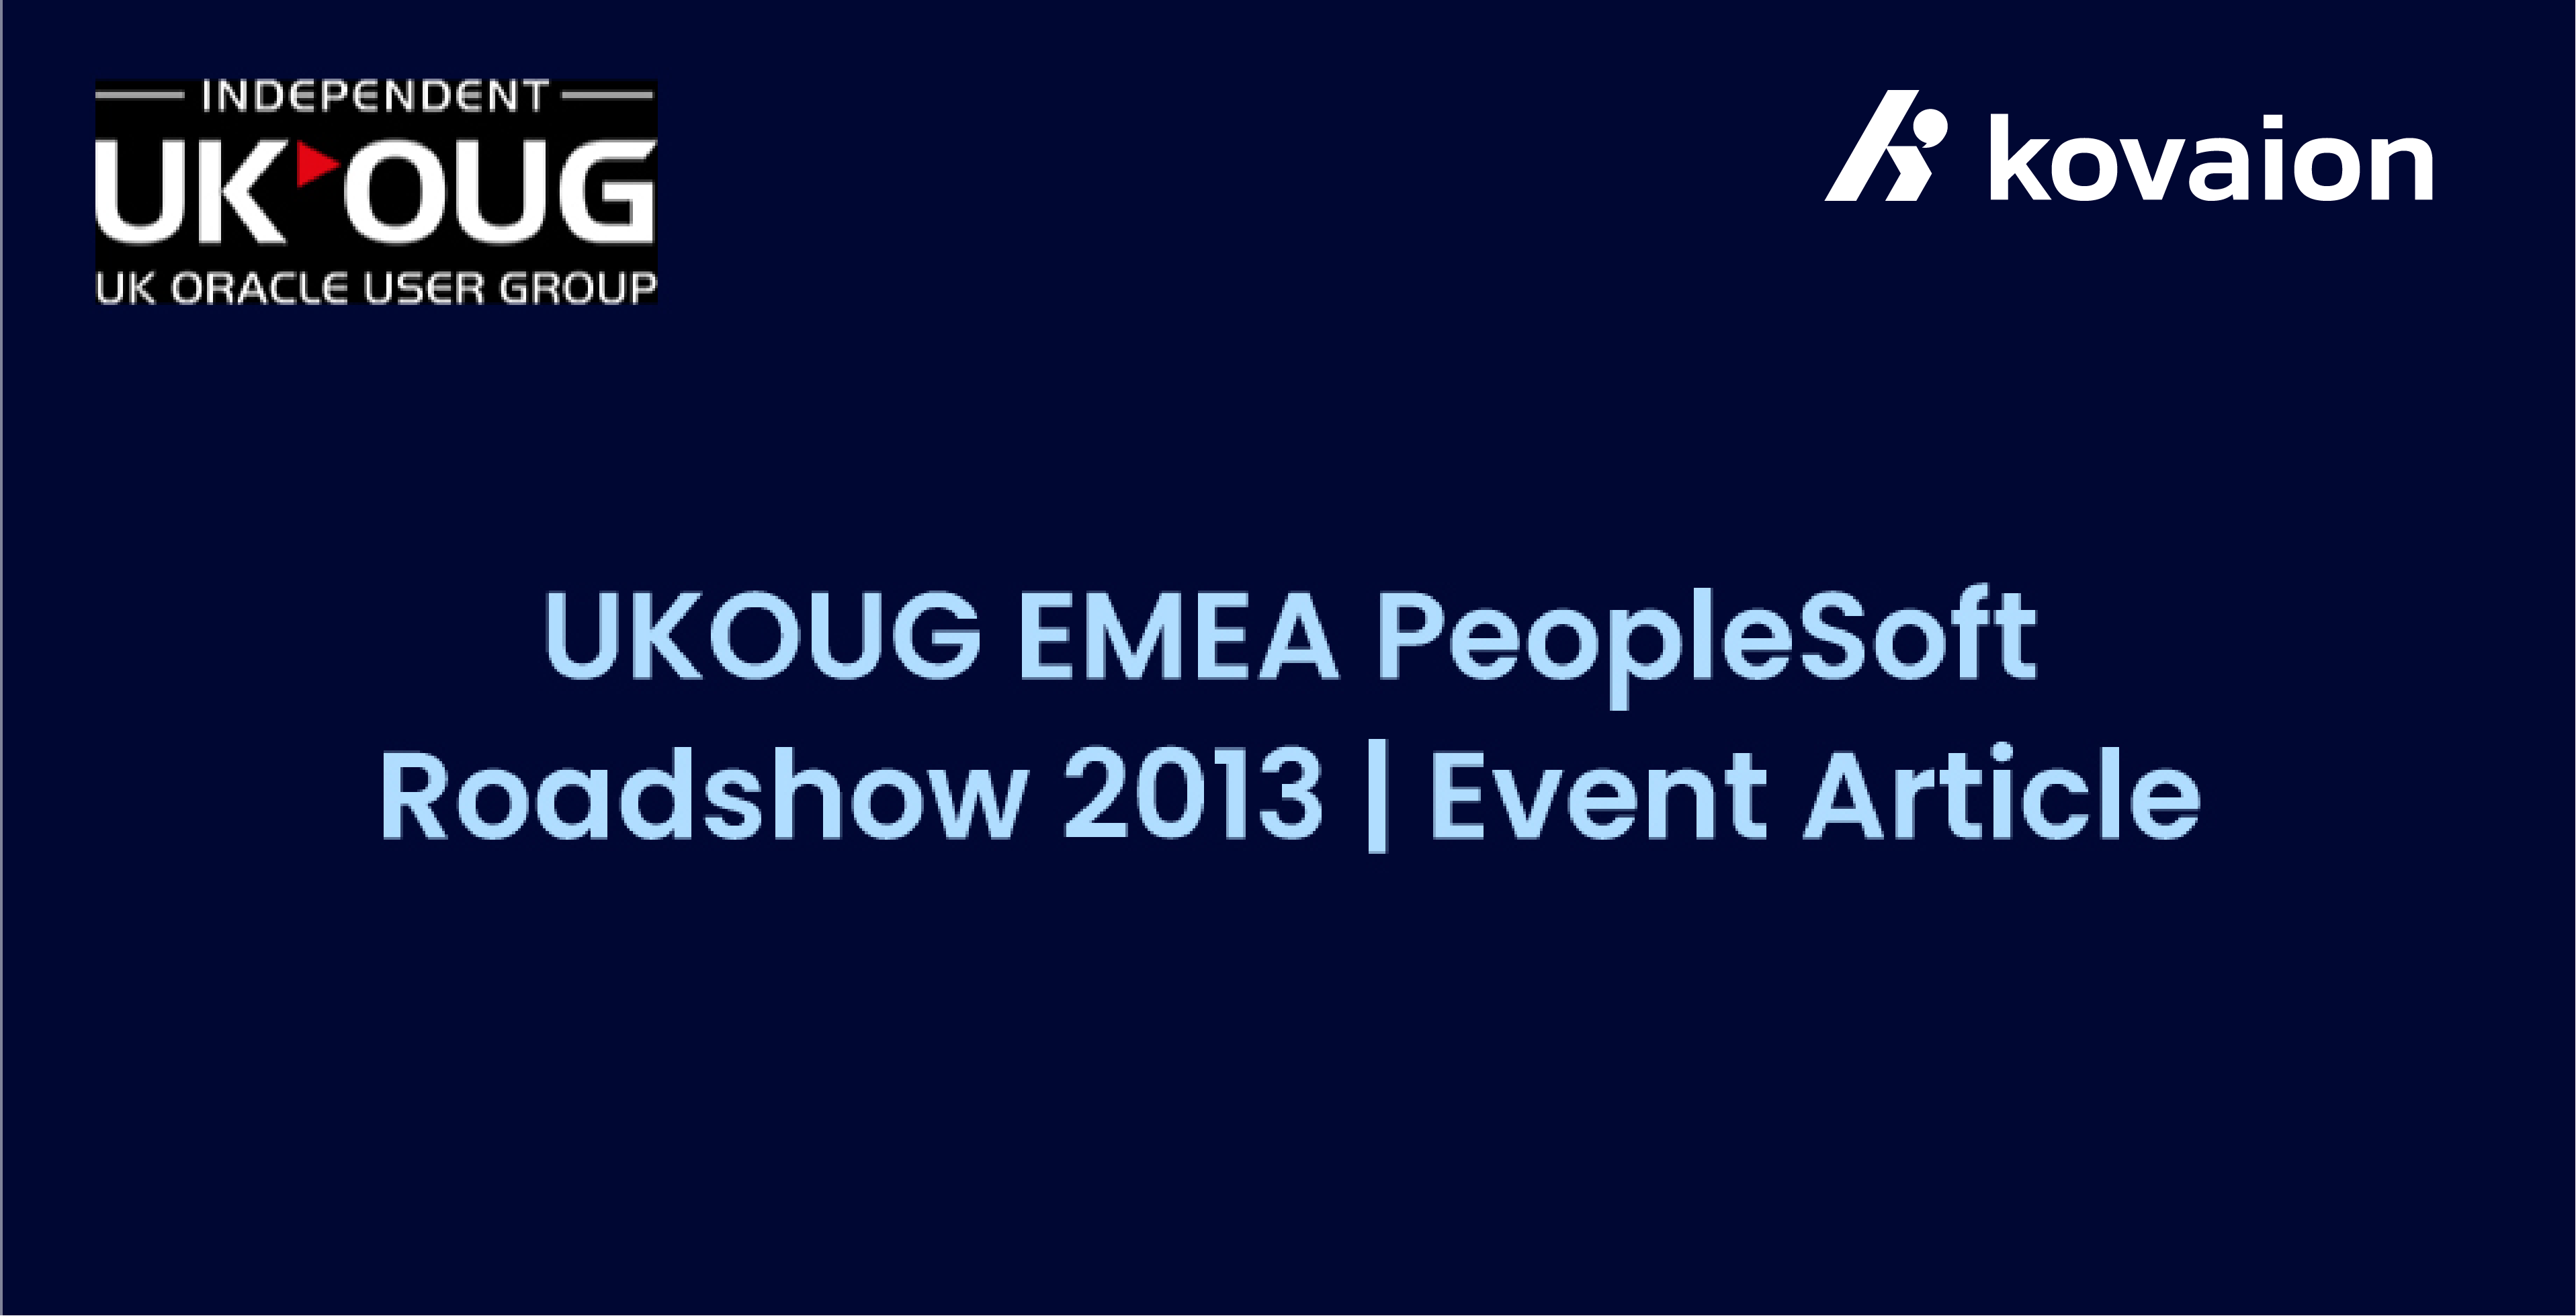 httpwww.ukoug.orgwhat-we-offernewsemea-peoplesoft-roadshow-2013-knowledge-sharing